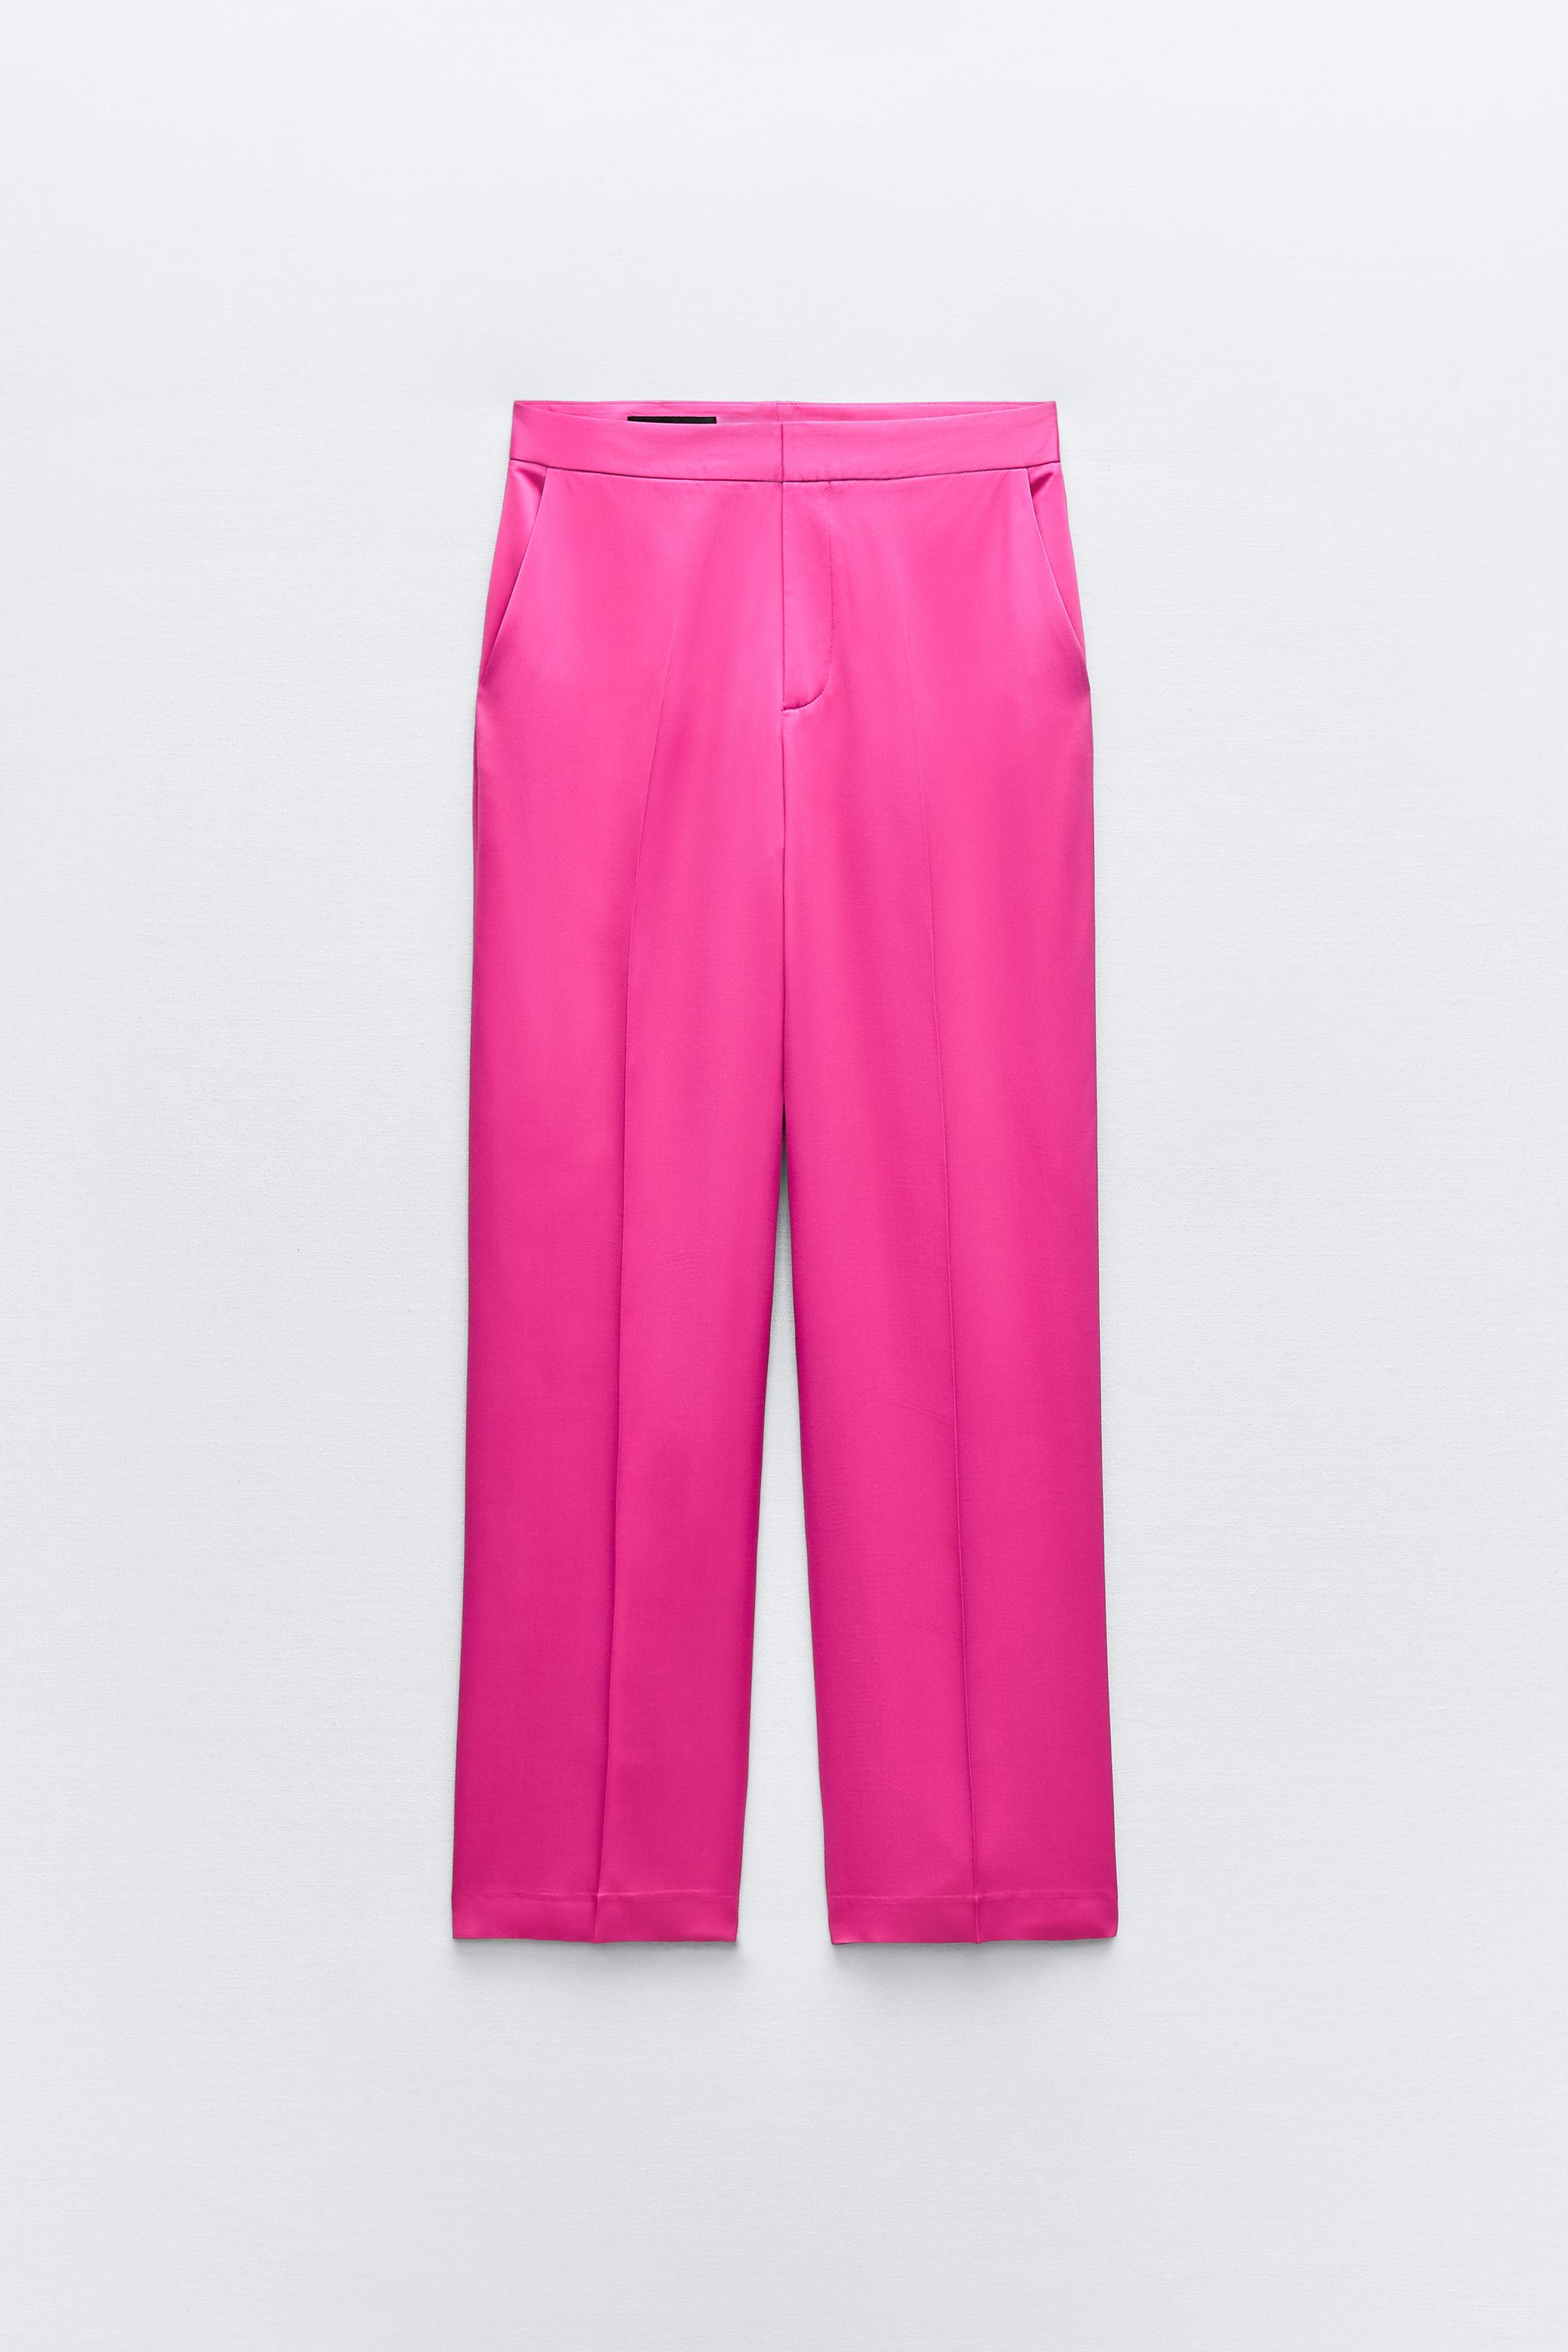 Zara Pink Wide Leg Trousers All Sizes Ref 4437 113